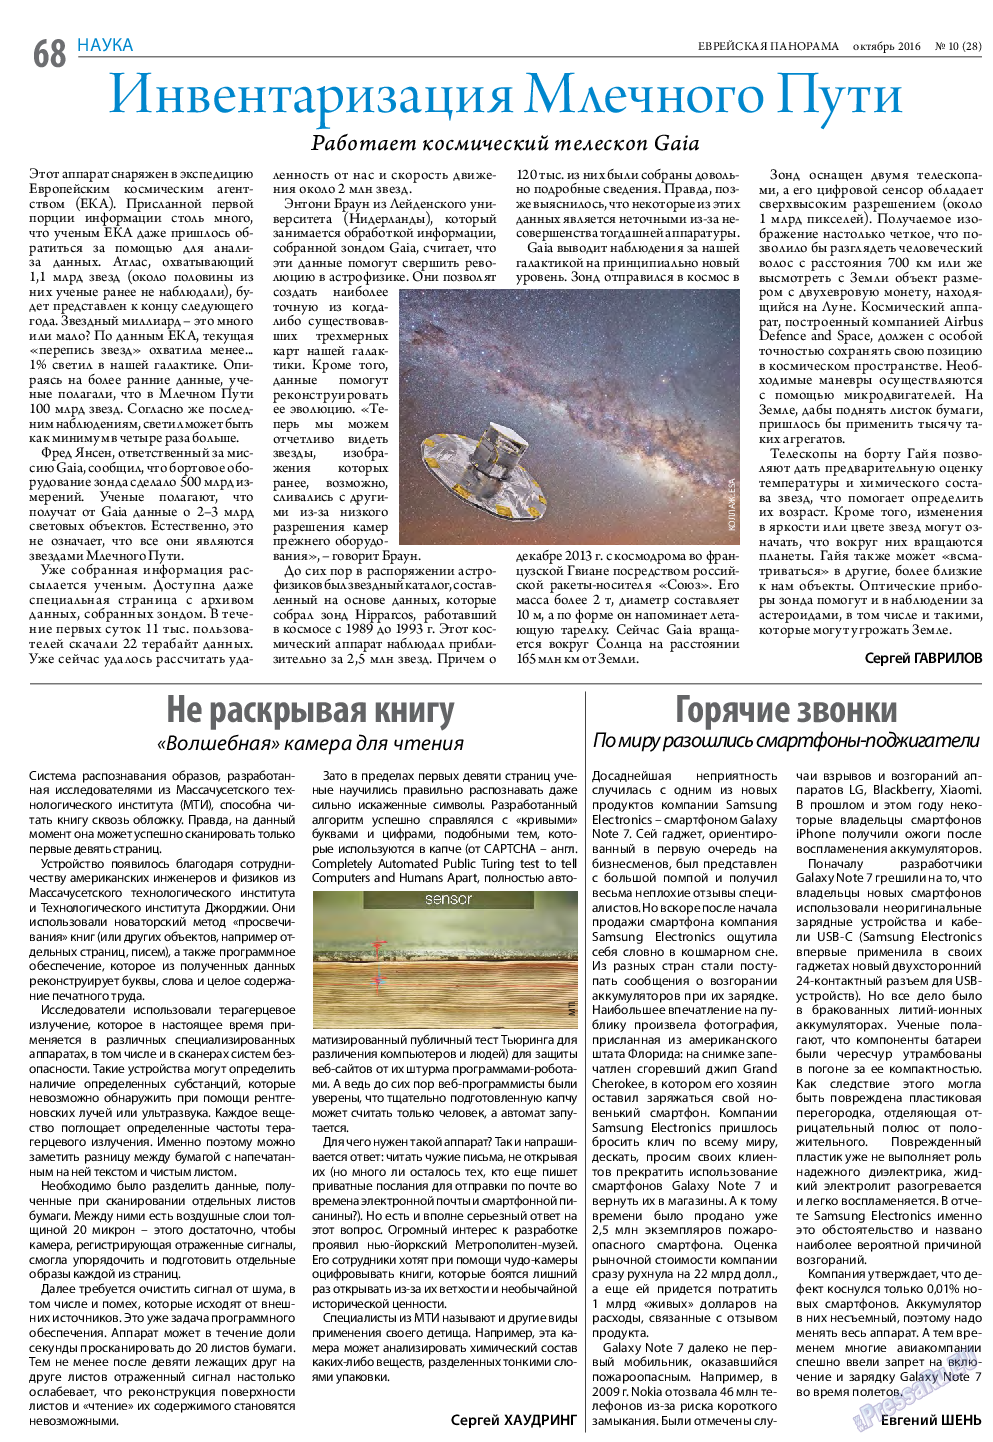 Еврейская панорама, газета. 2016 №10 стр.68